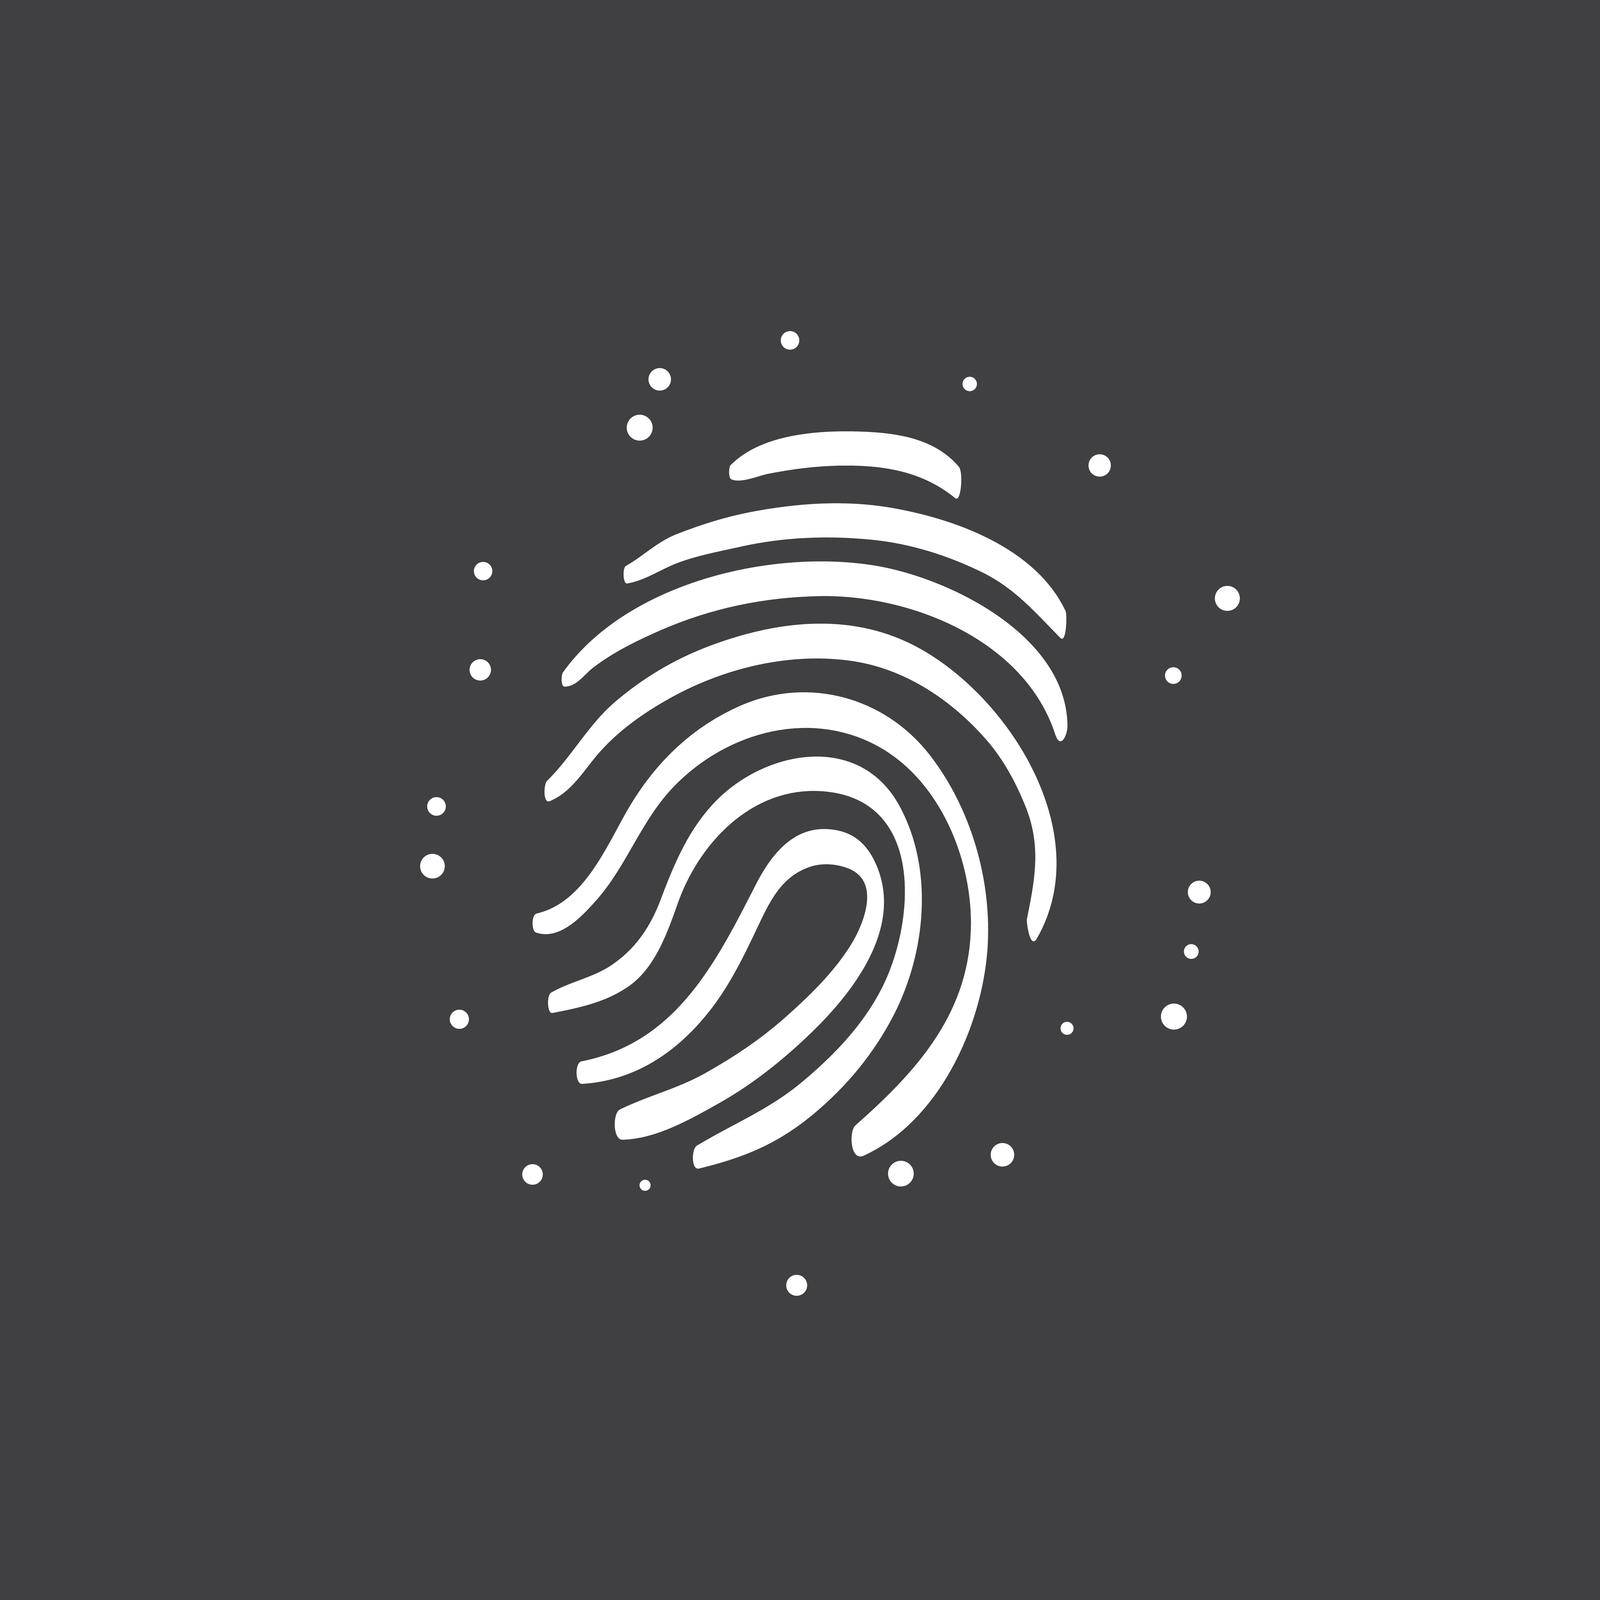 Sketch icon in black - Fingerprint by puruan